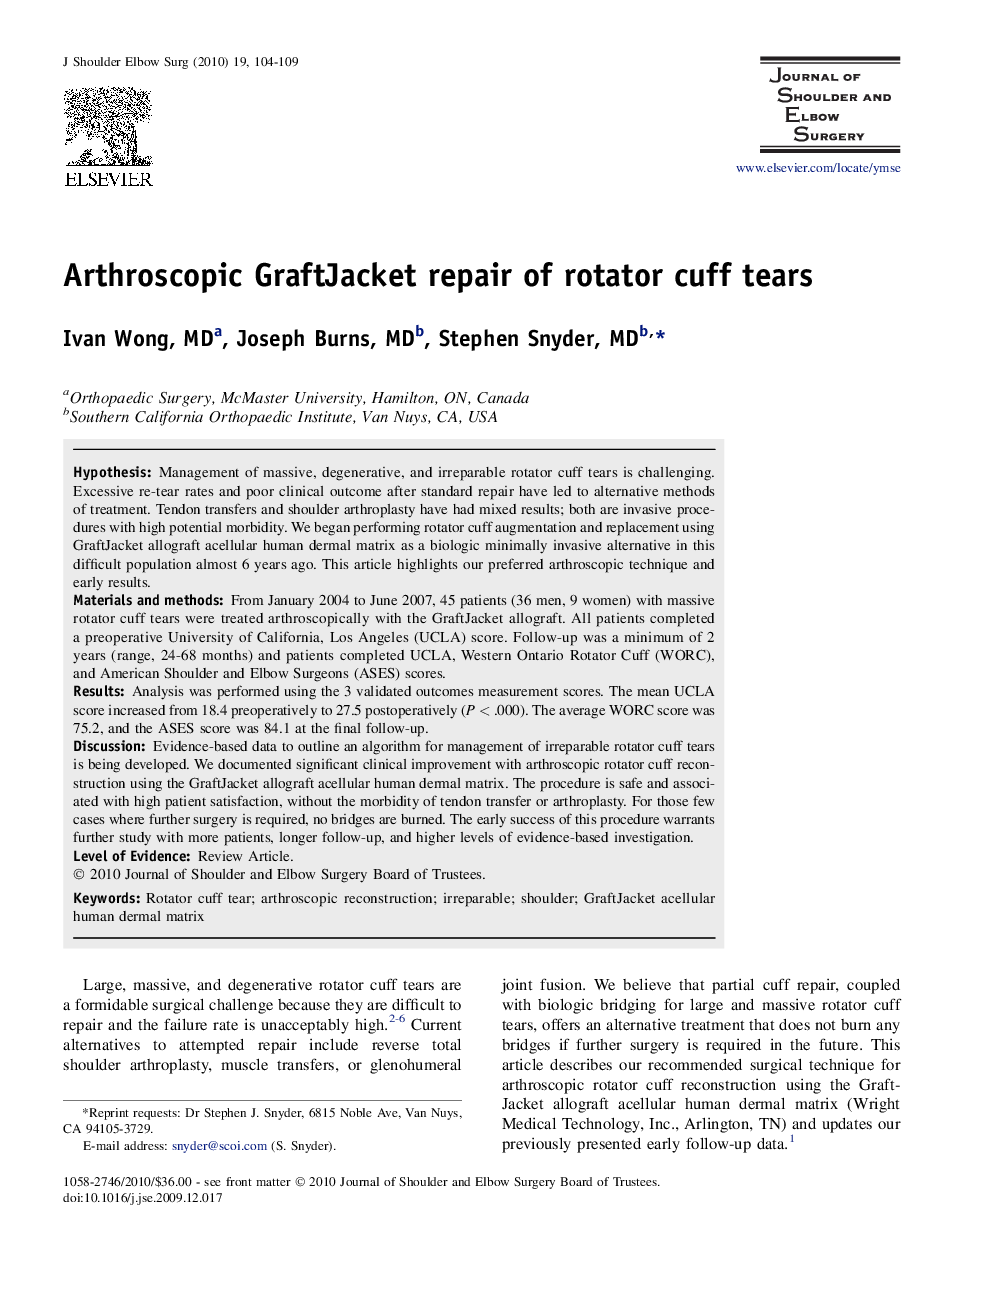 Arthroscopic GraftJacket repair of rotator cuff tears